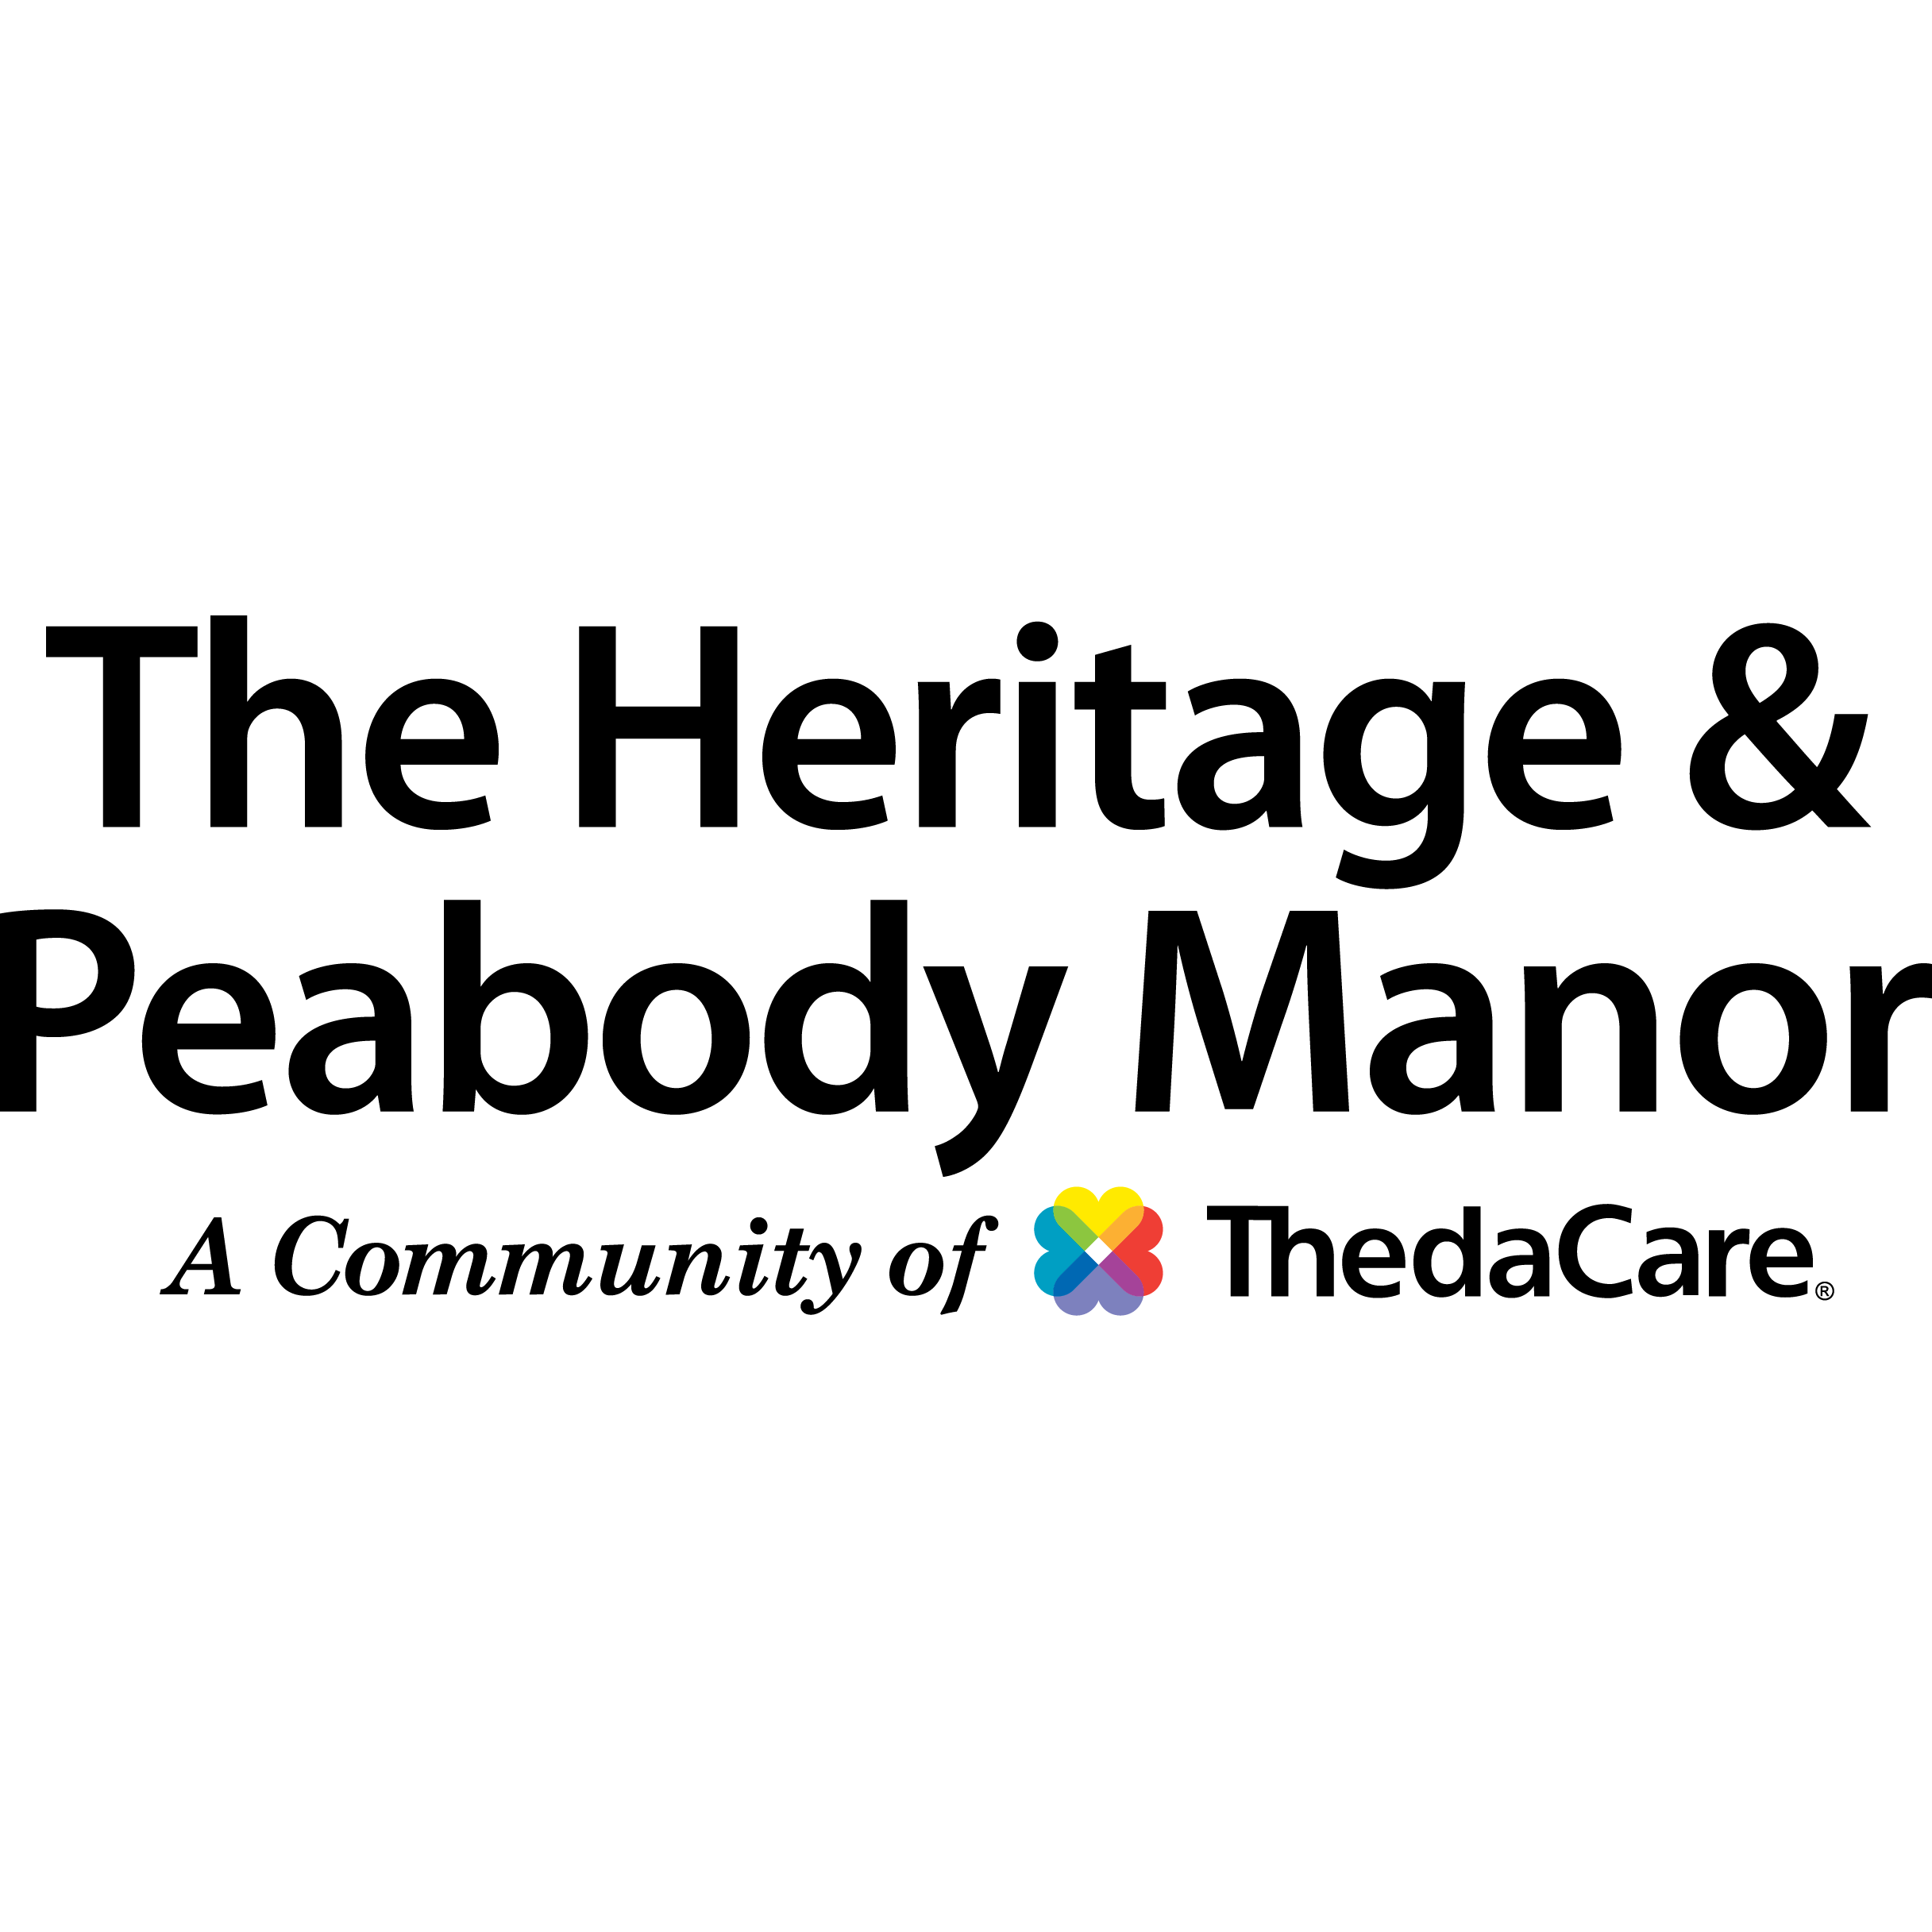 Peabody Manor